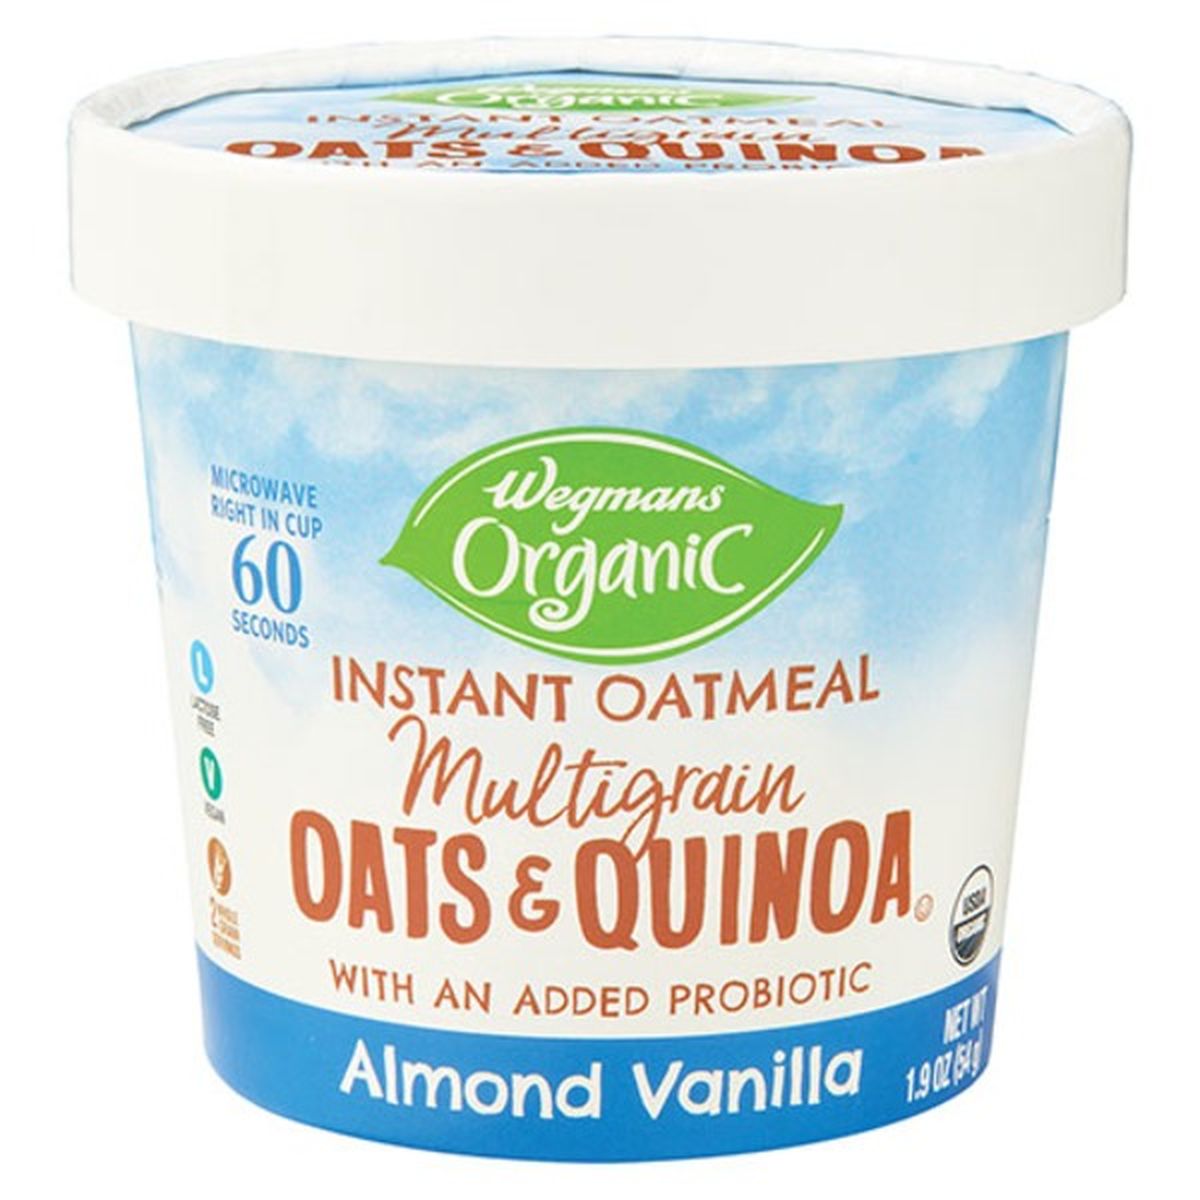 Calories in Wegmans Organic Almond Vanilla Oats & Quinoa Instant Oatmeal